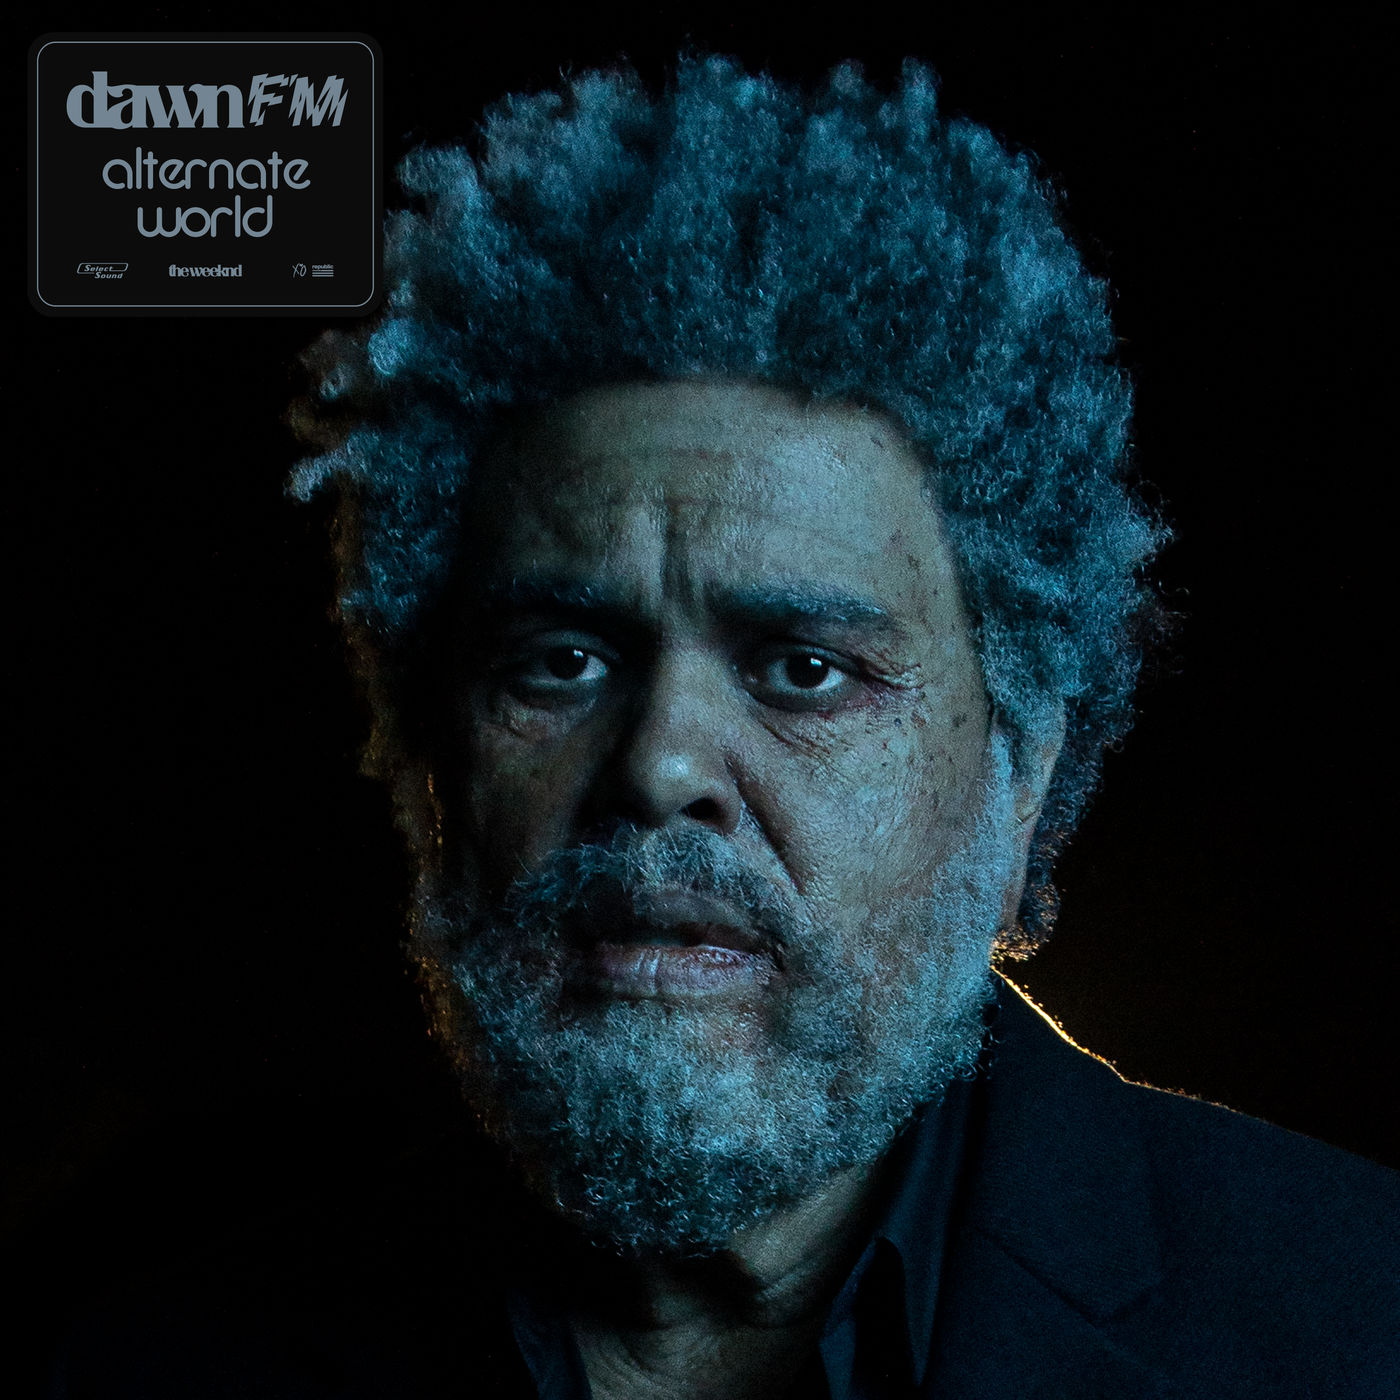 The Weeknd – Dawn FM (Alternate World)【44.1kHz／24bit】美国区-OppsUpro音乐帝国